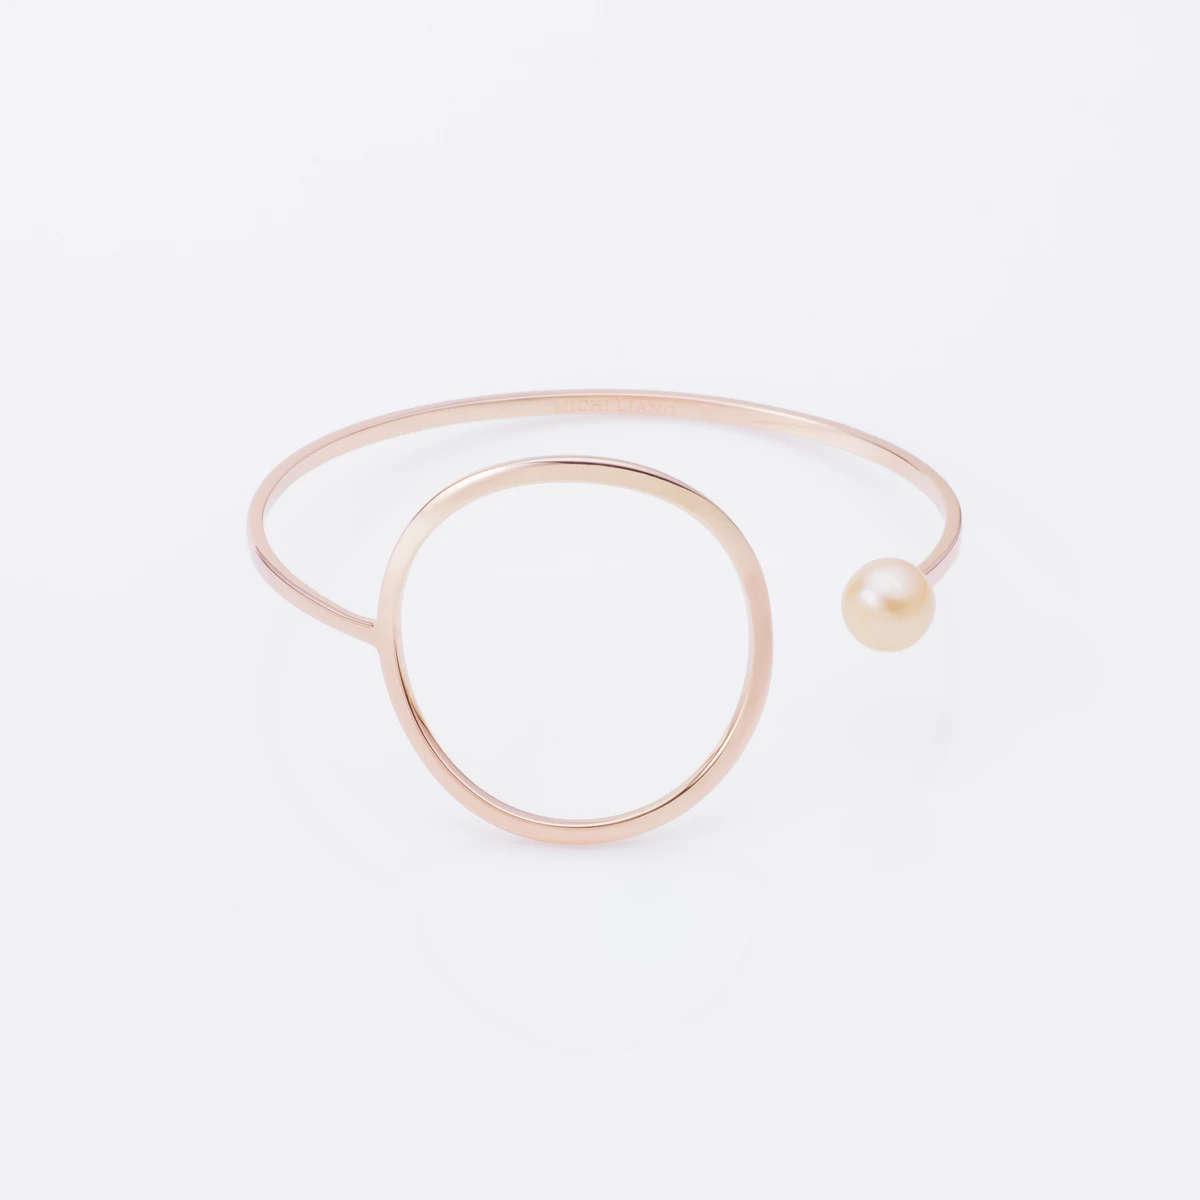 custom made bracelet in Rose gold plating OEM/ODM Jewelry silver